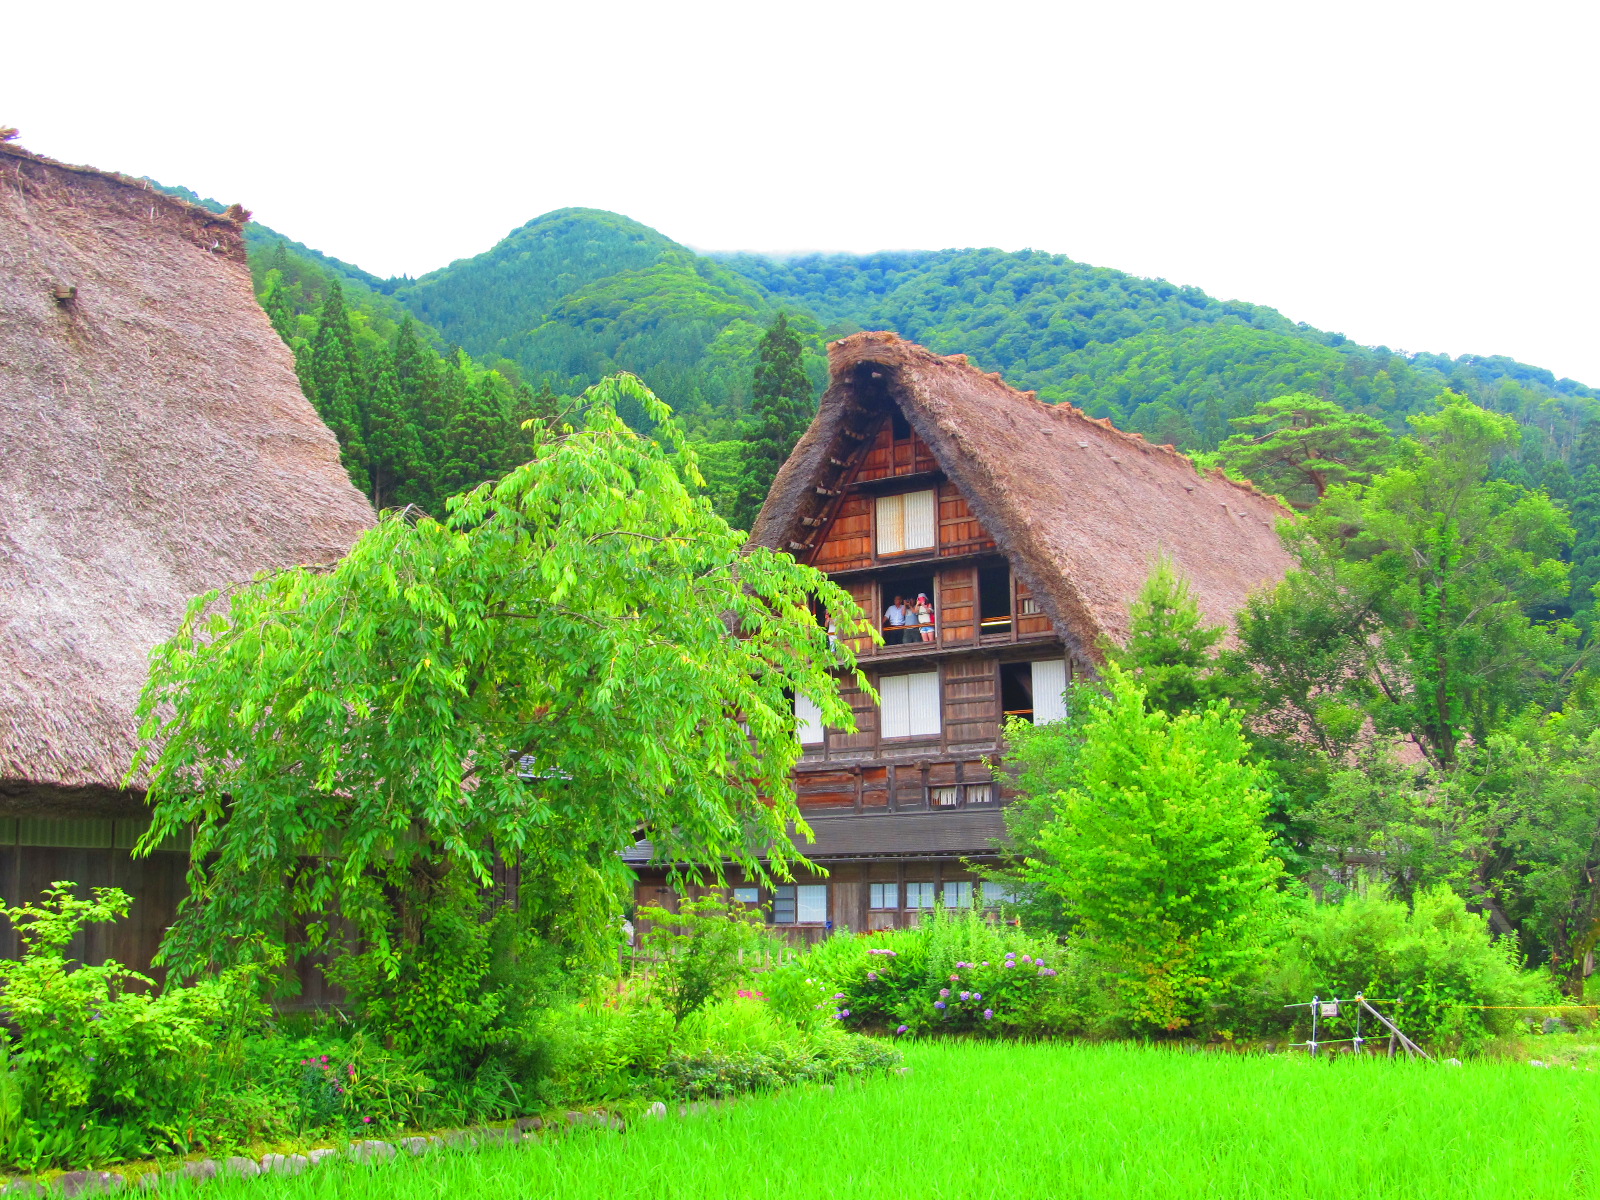 File:白川郷合掌造り - panoramio.jpg - Wikimedia Commons -ในช่วงฤดูใบไม้ผลิ ของหมู่บ้าน ชิราคาวาโกะ